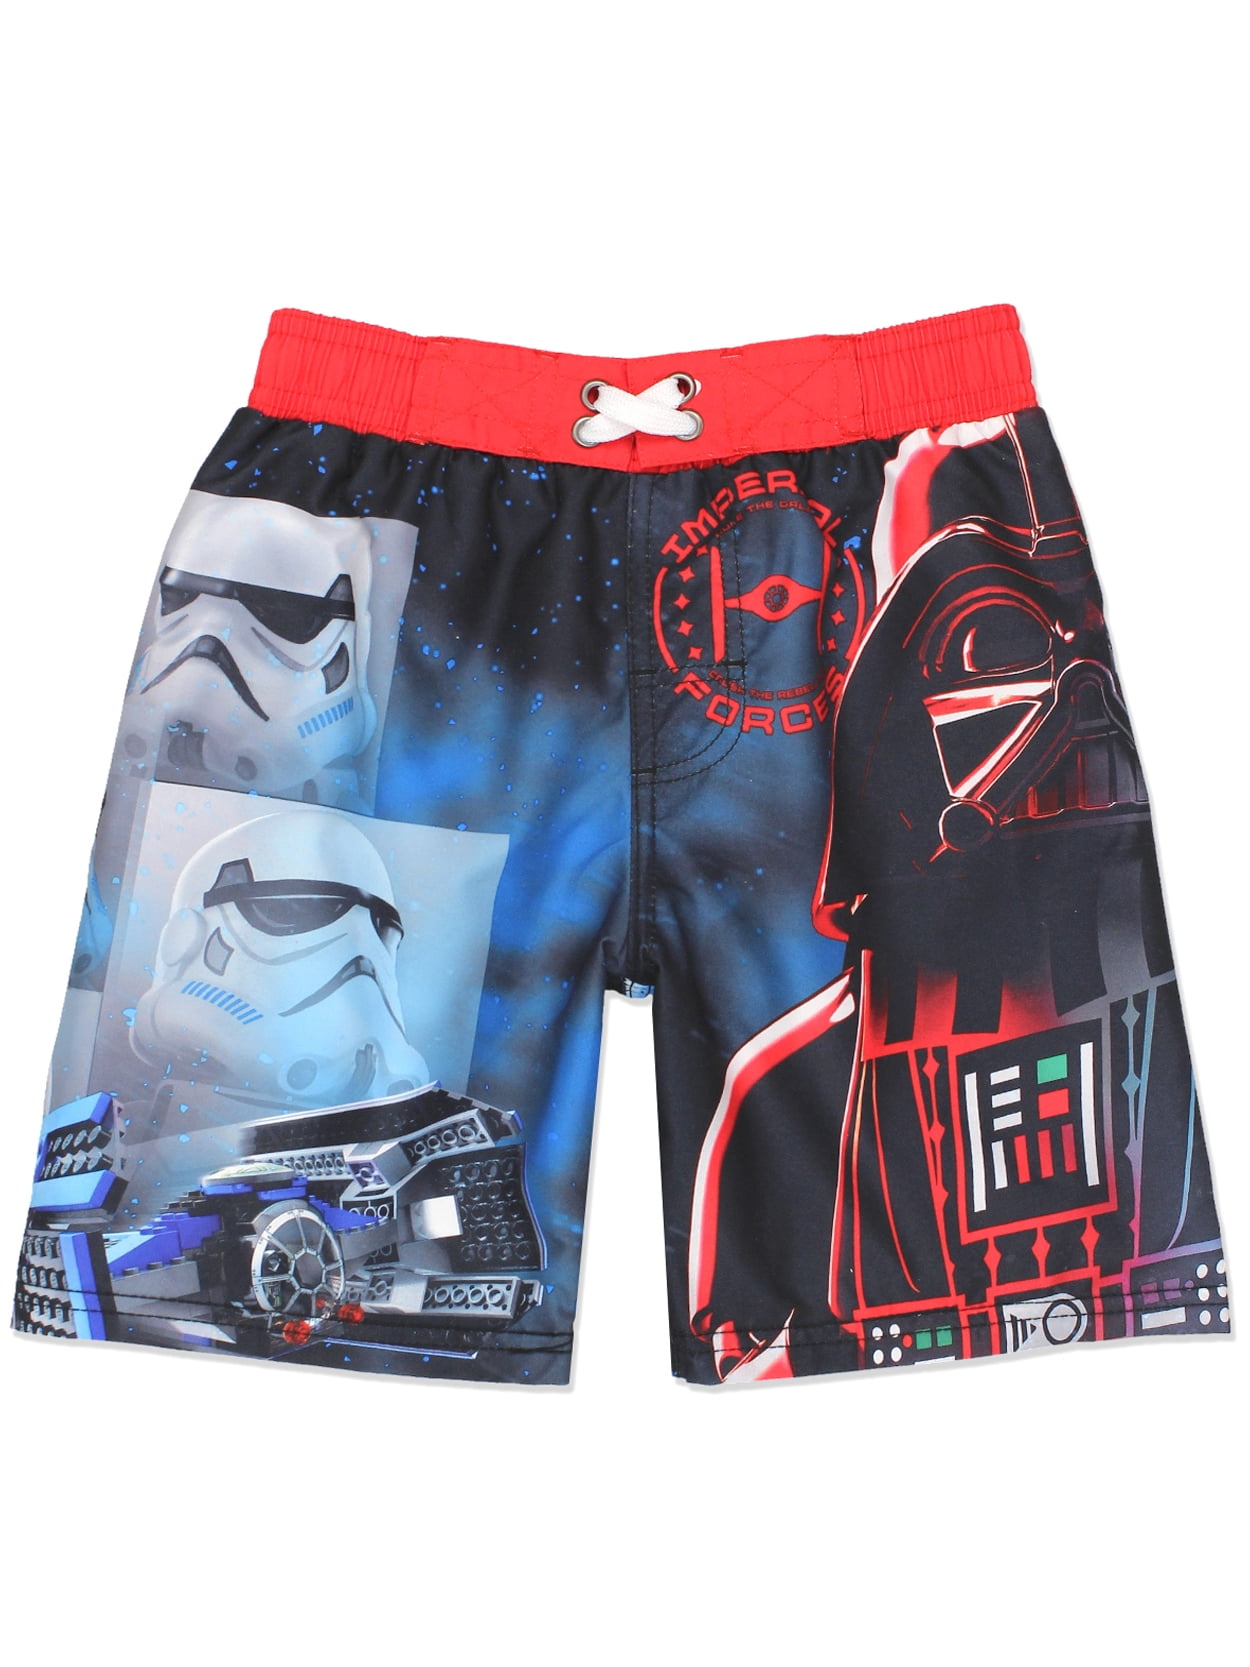 Lego Star Wars Darth Vader Swim Trunks Shorts Boy Size 8 10/12